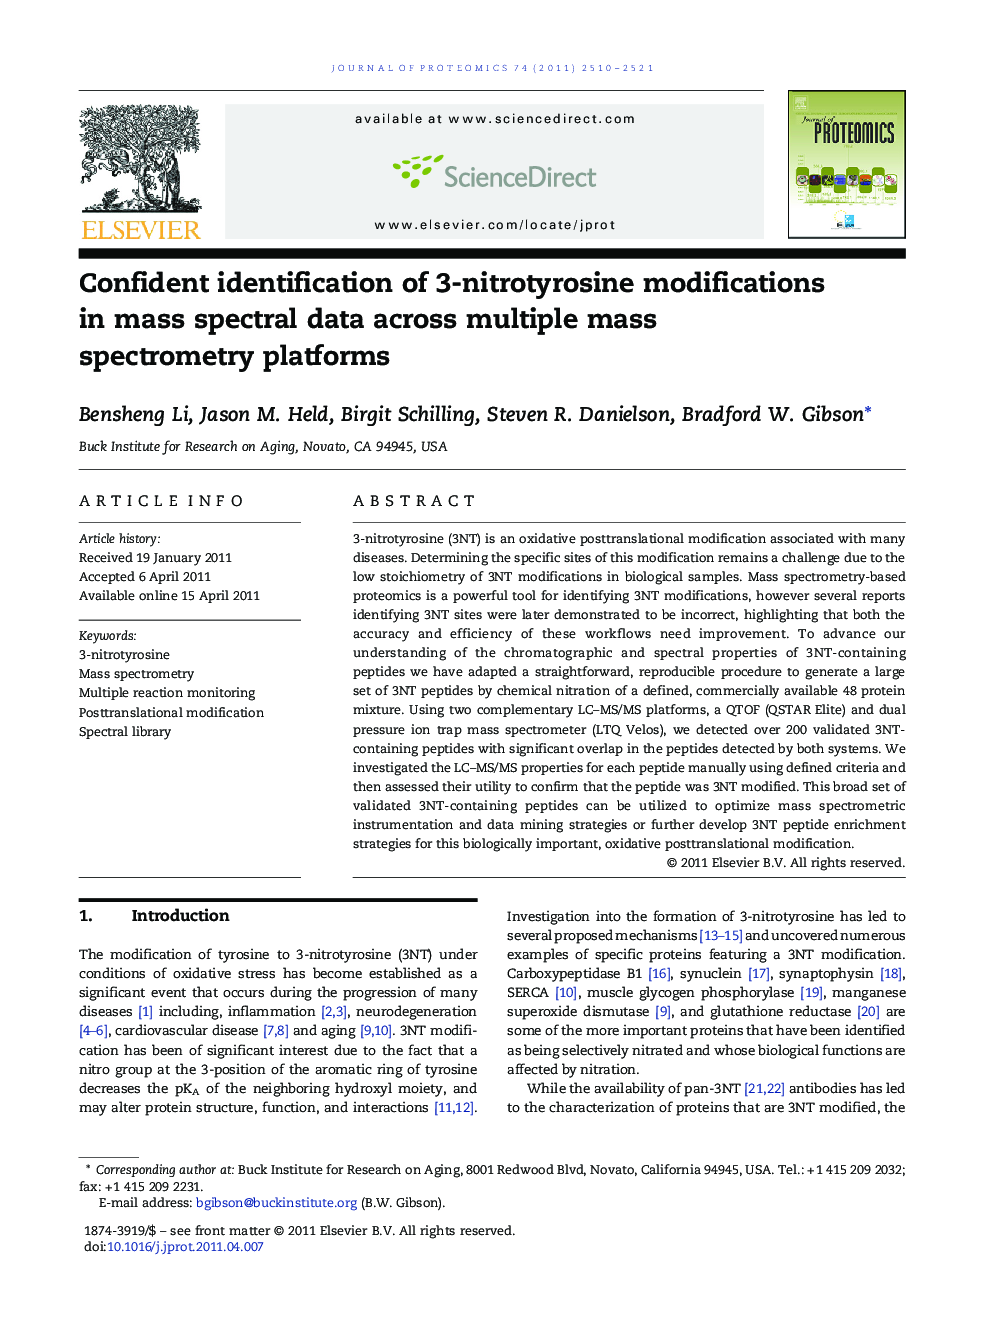 Confident identification of 3-nitrotyrosine modifications in mass spectral data across multiple mass spectrometry platforms